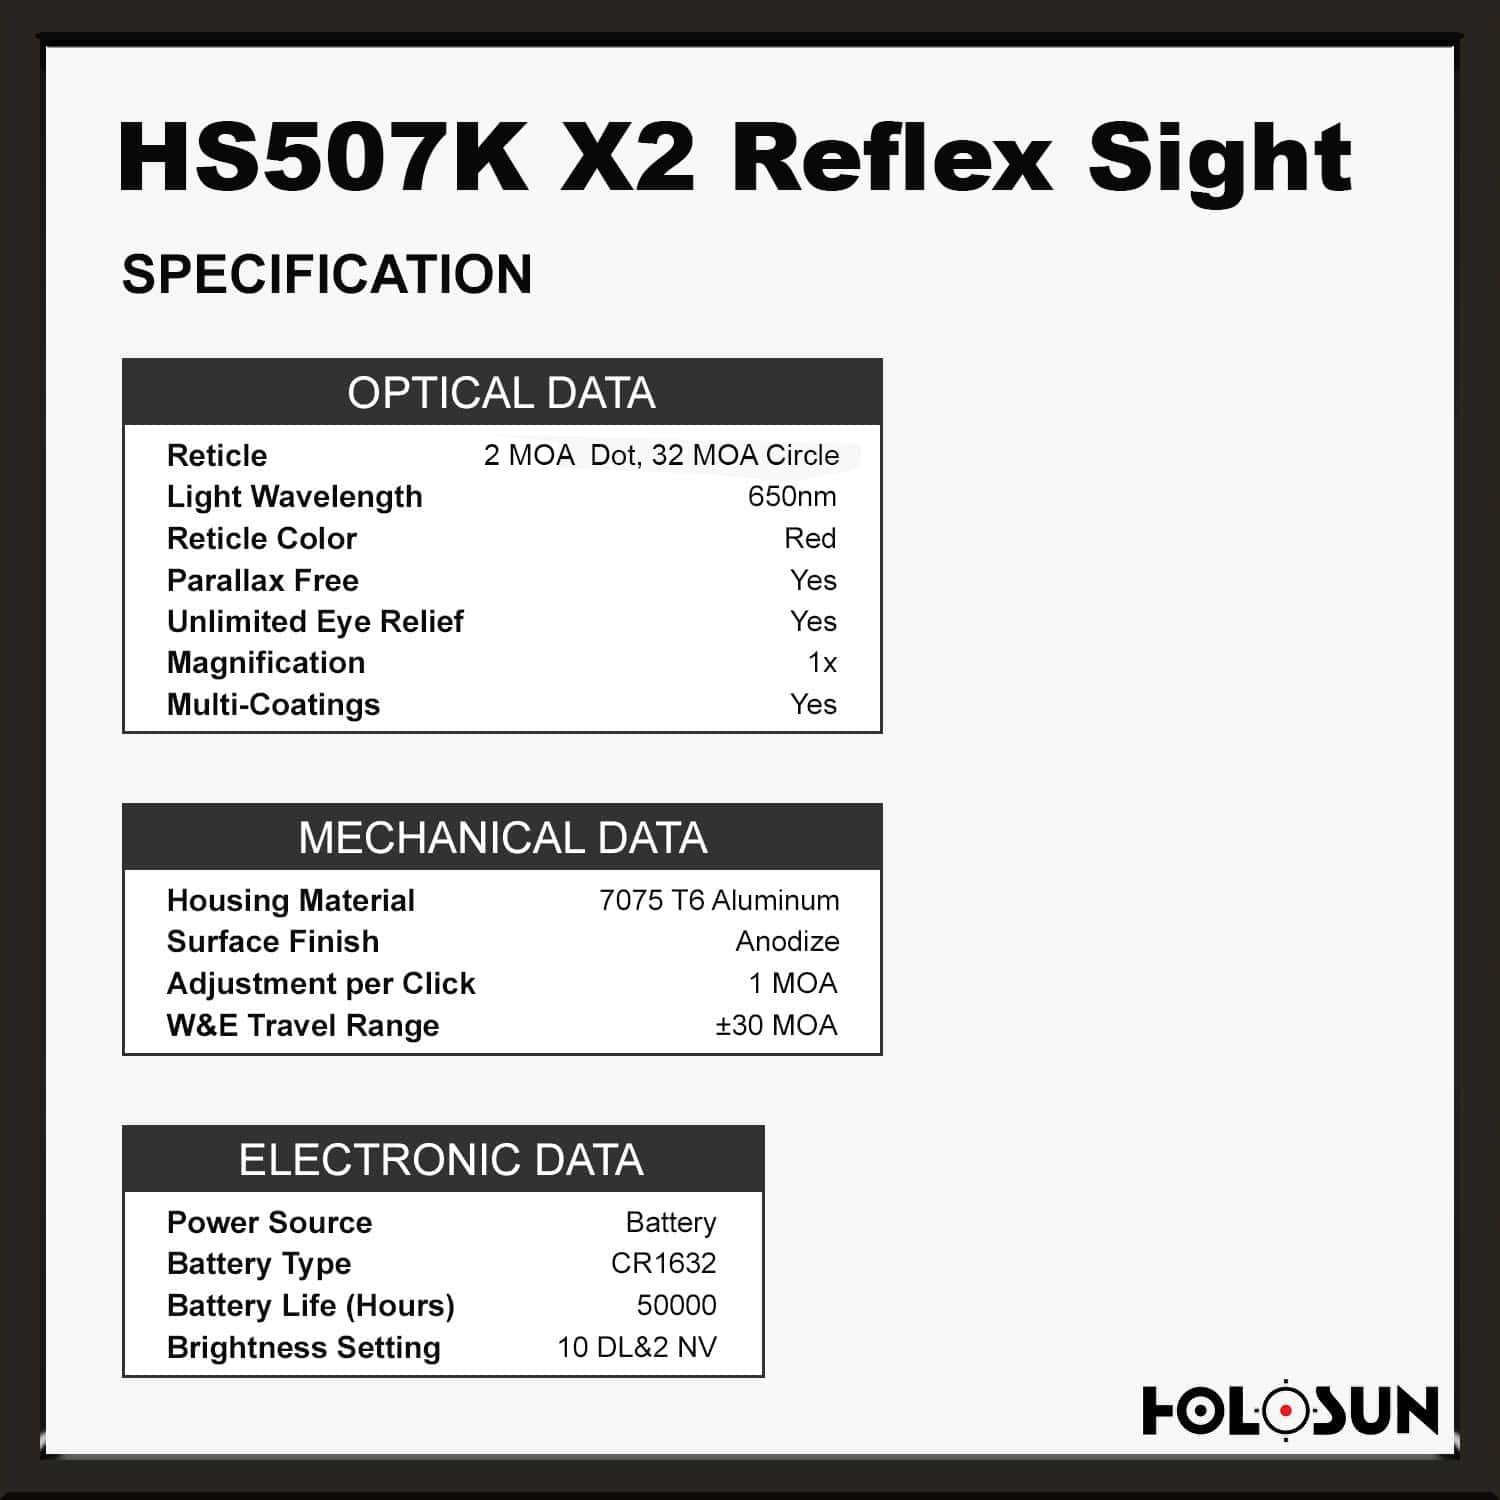 Holosun 507K X2 Red Dot, 32 MOA Ring & 2 MOA Red Dot, Side Battery - HS507K-X2